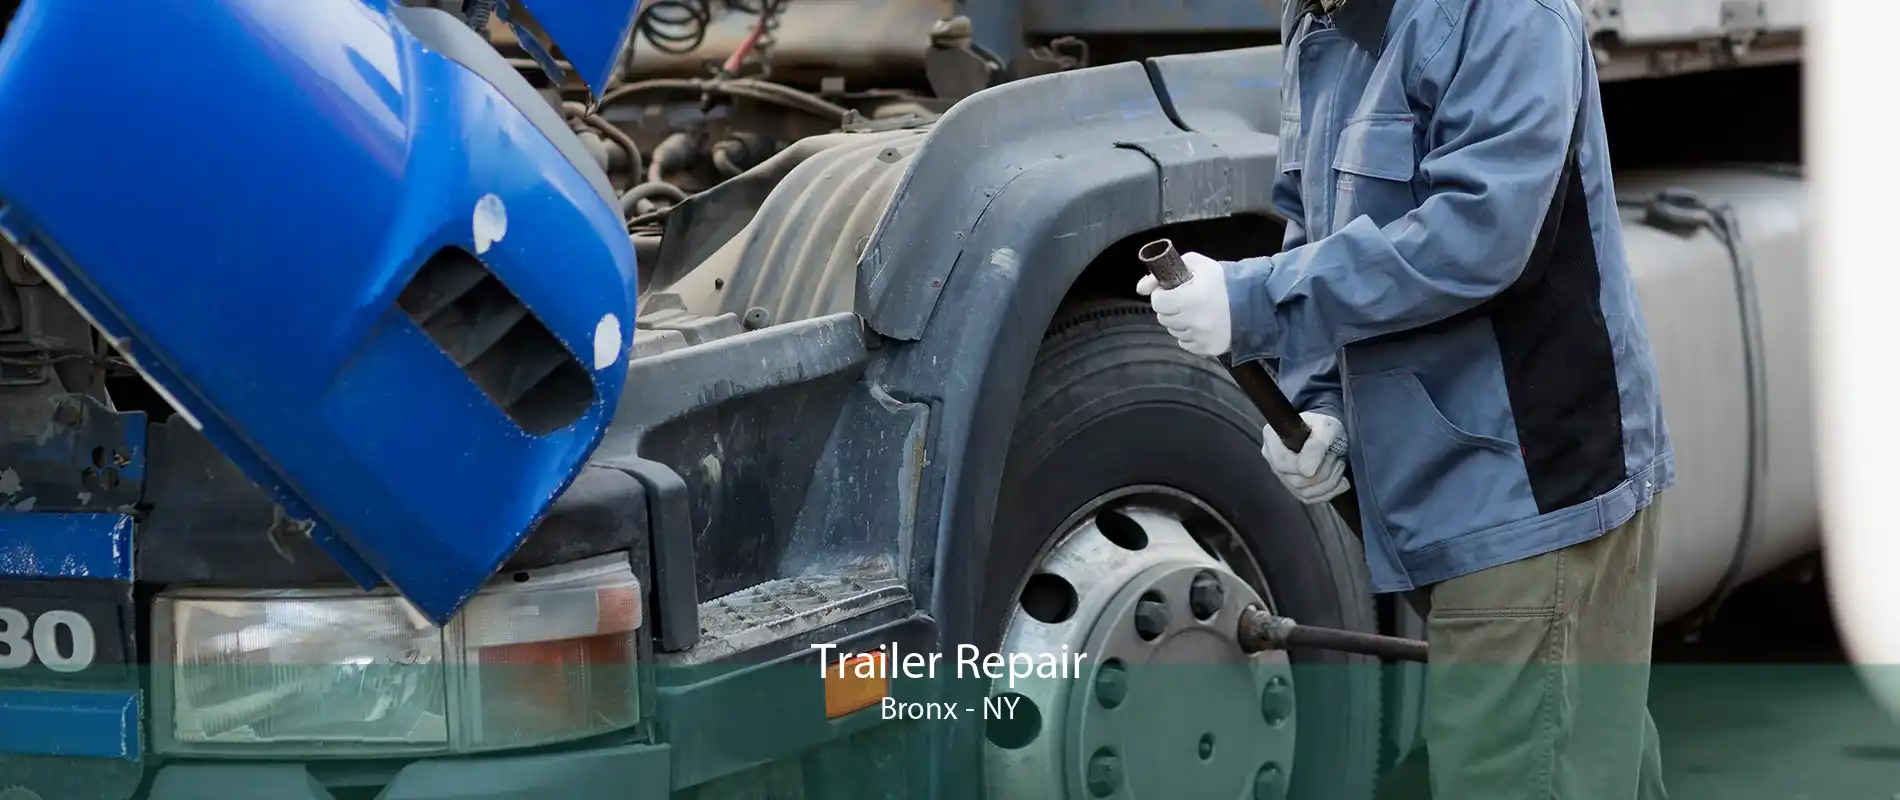 Trailer Repair Bronx - NY